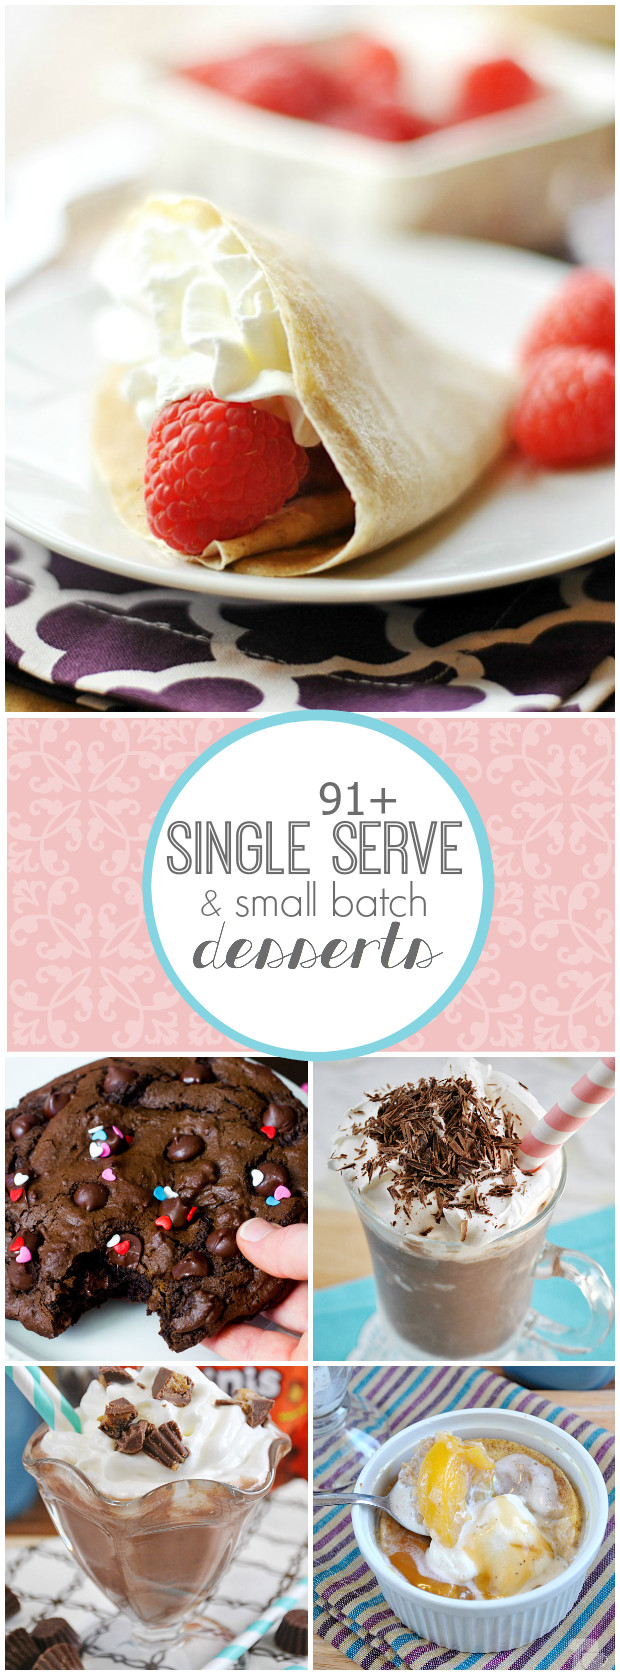 Single Serve Desserts
 90 Small Batch Desserts